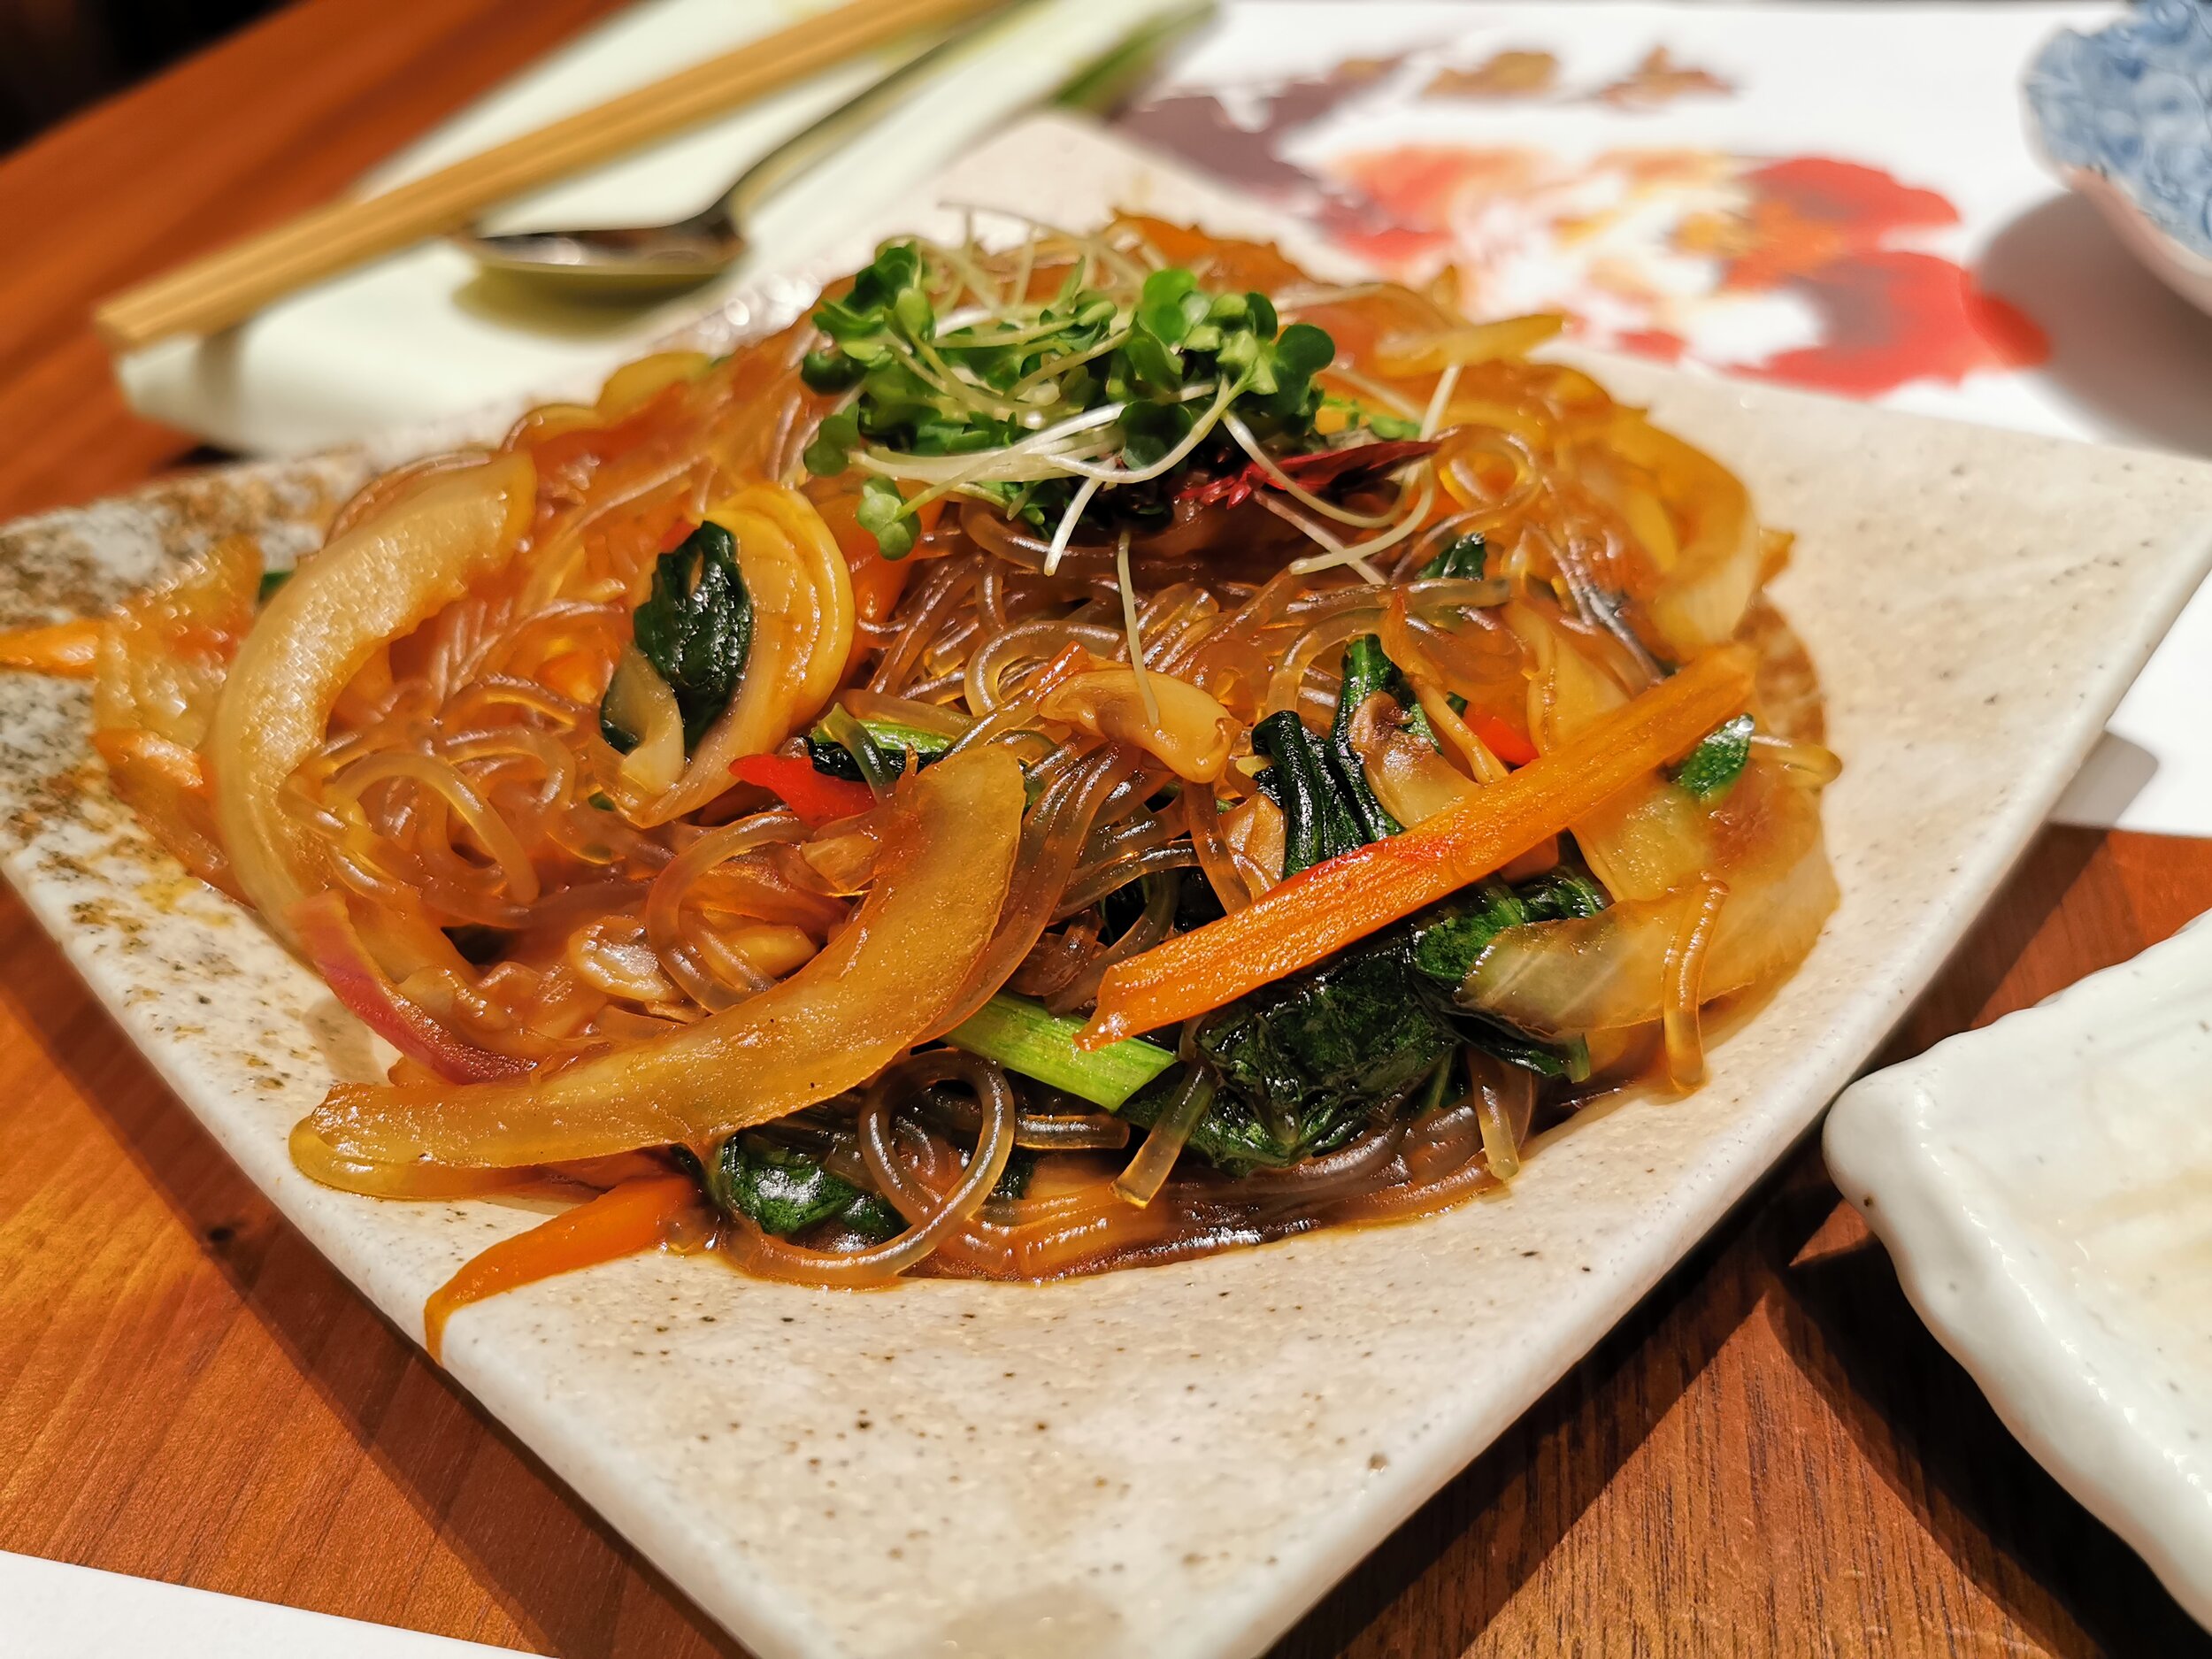 Vegan Korean glass noodles served with mixed vegetables in sesame oil